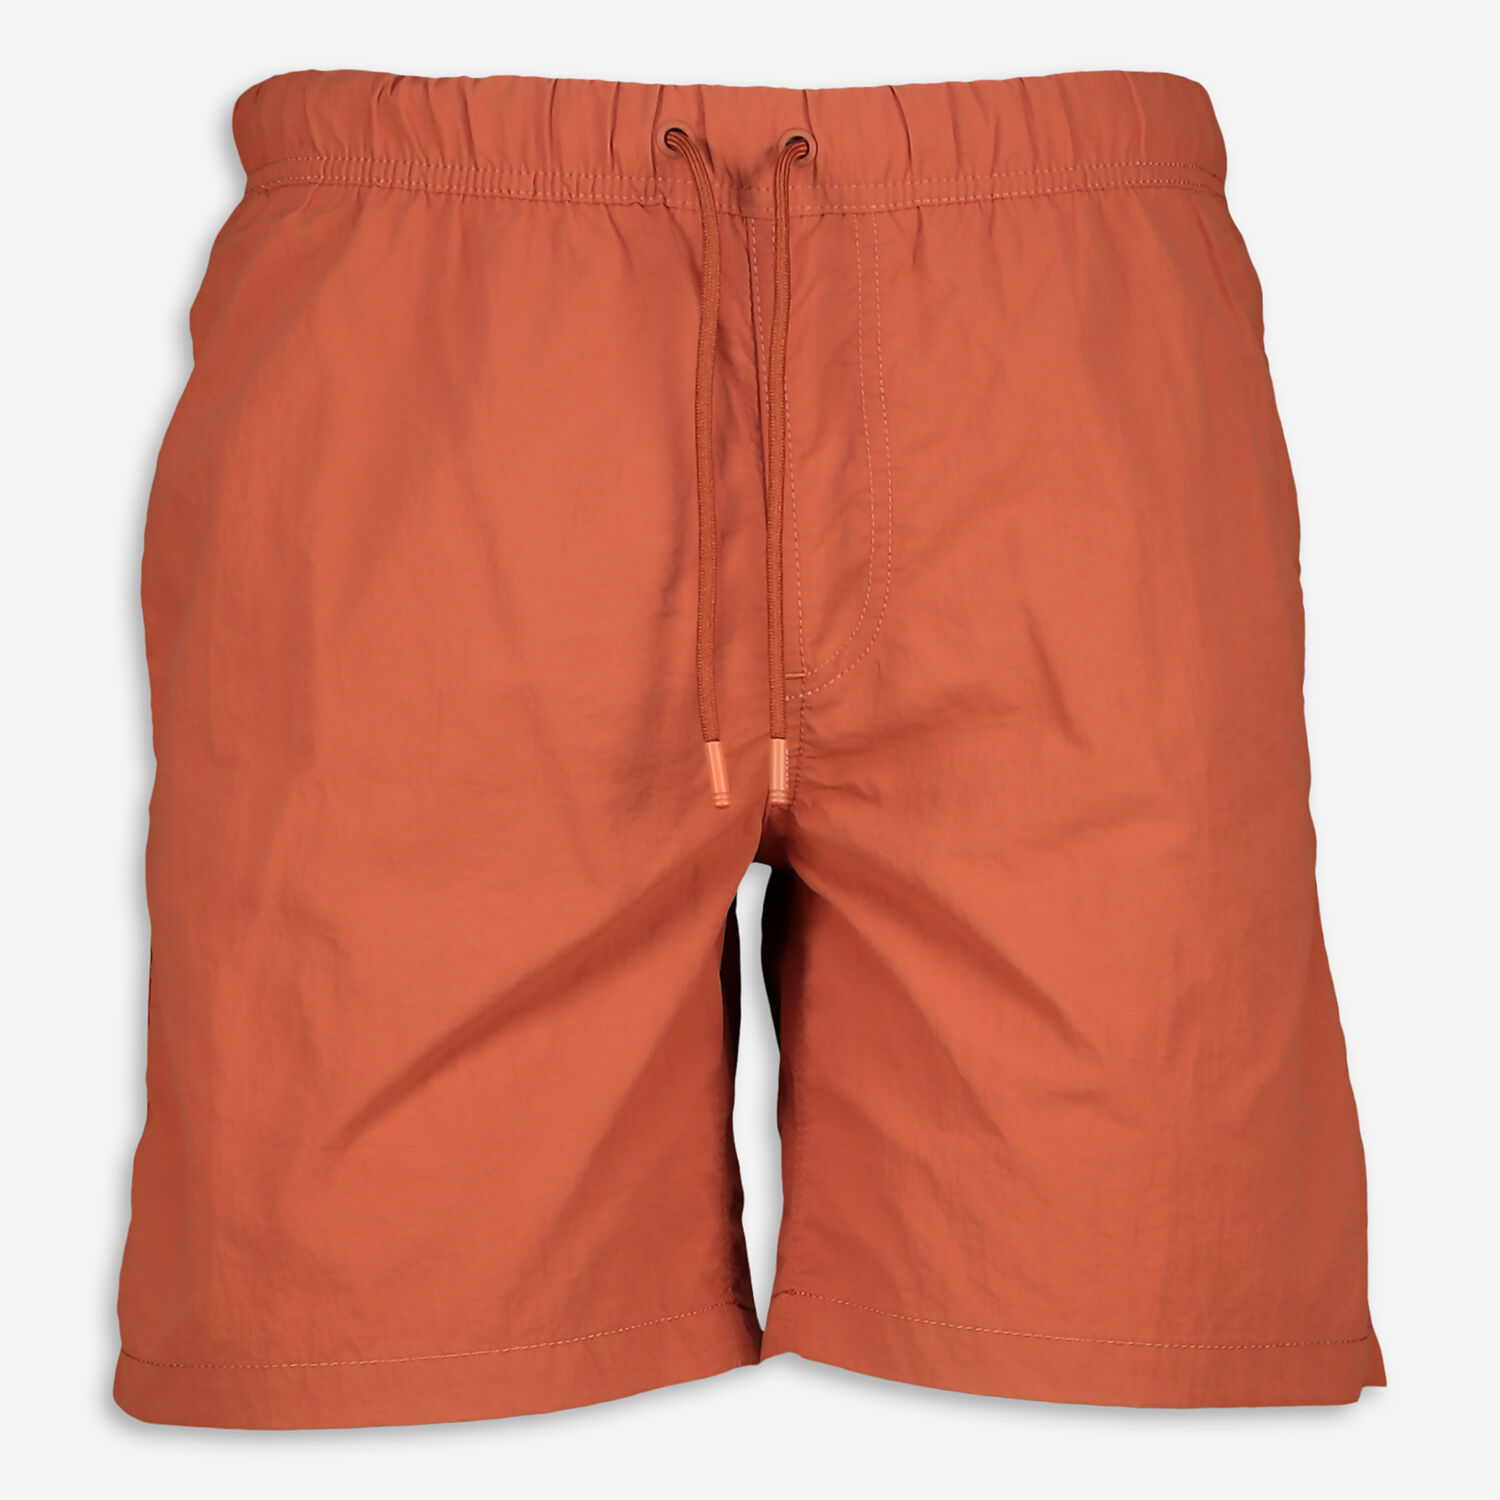 Orange Cross Front Shorts - TK Maxx UK